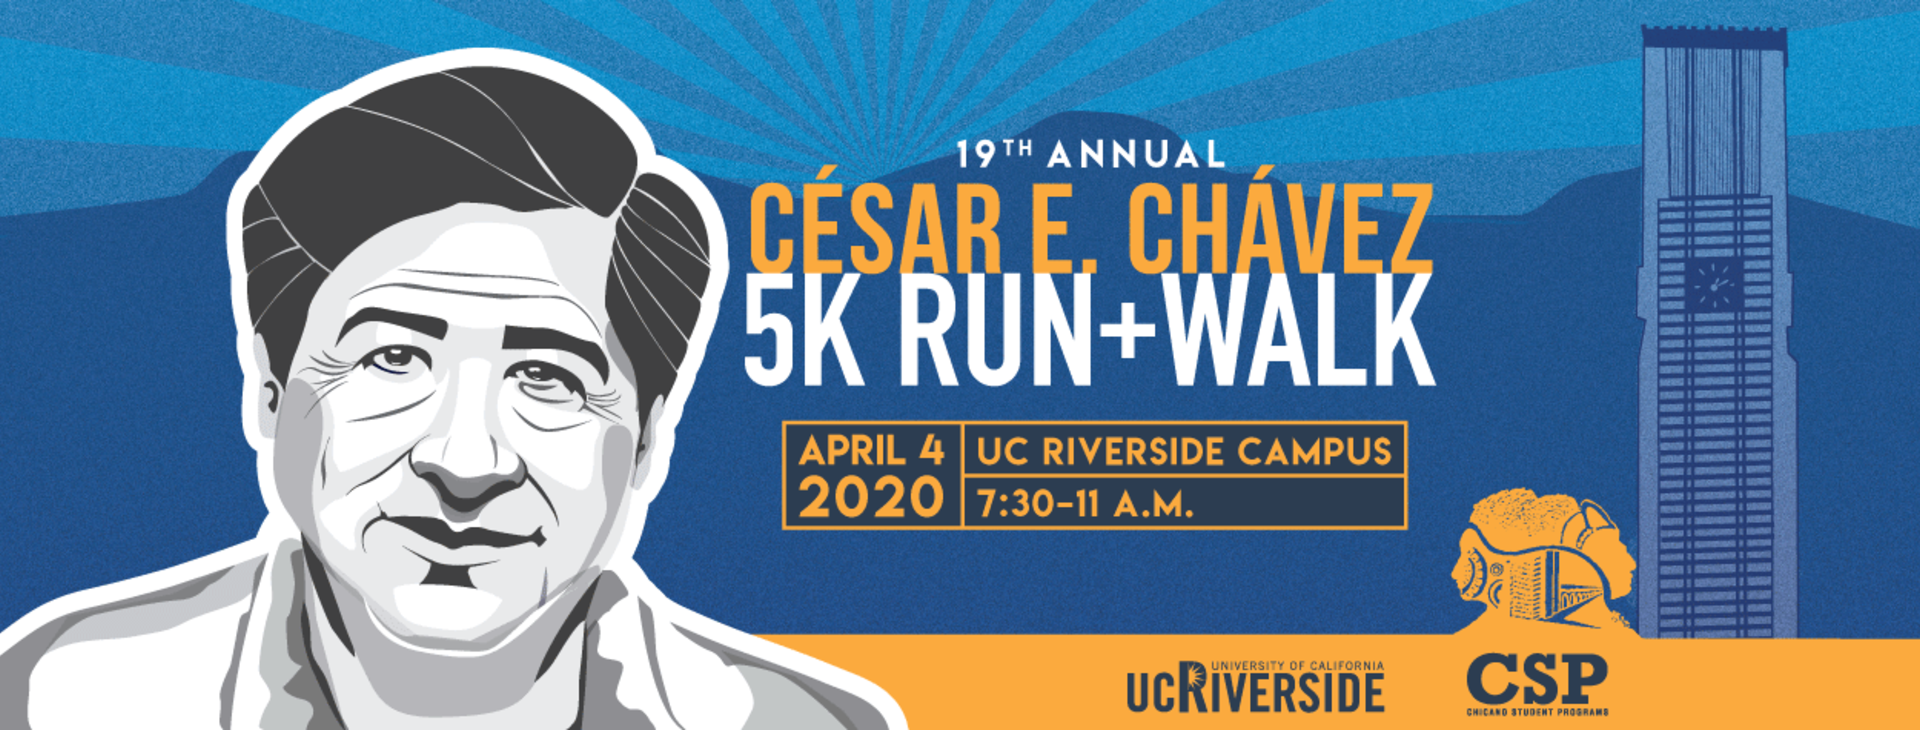 Cesar E. Chavez 5K Run/Walk Event Graphic